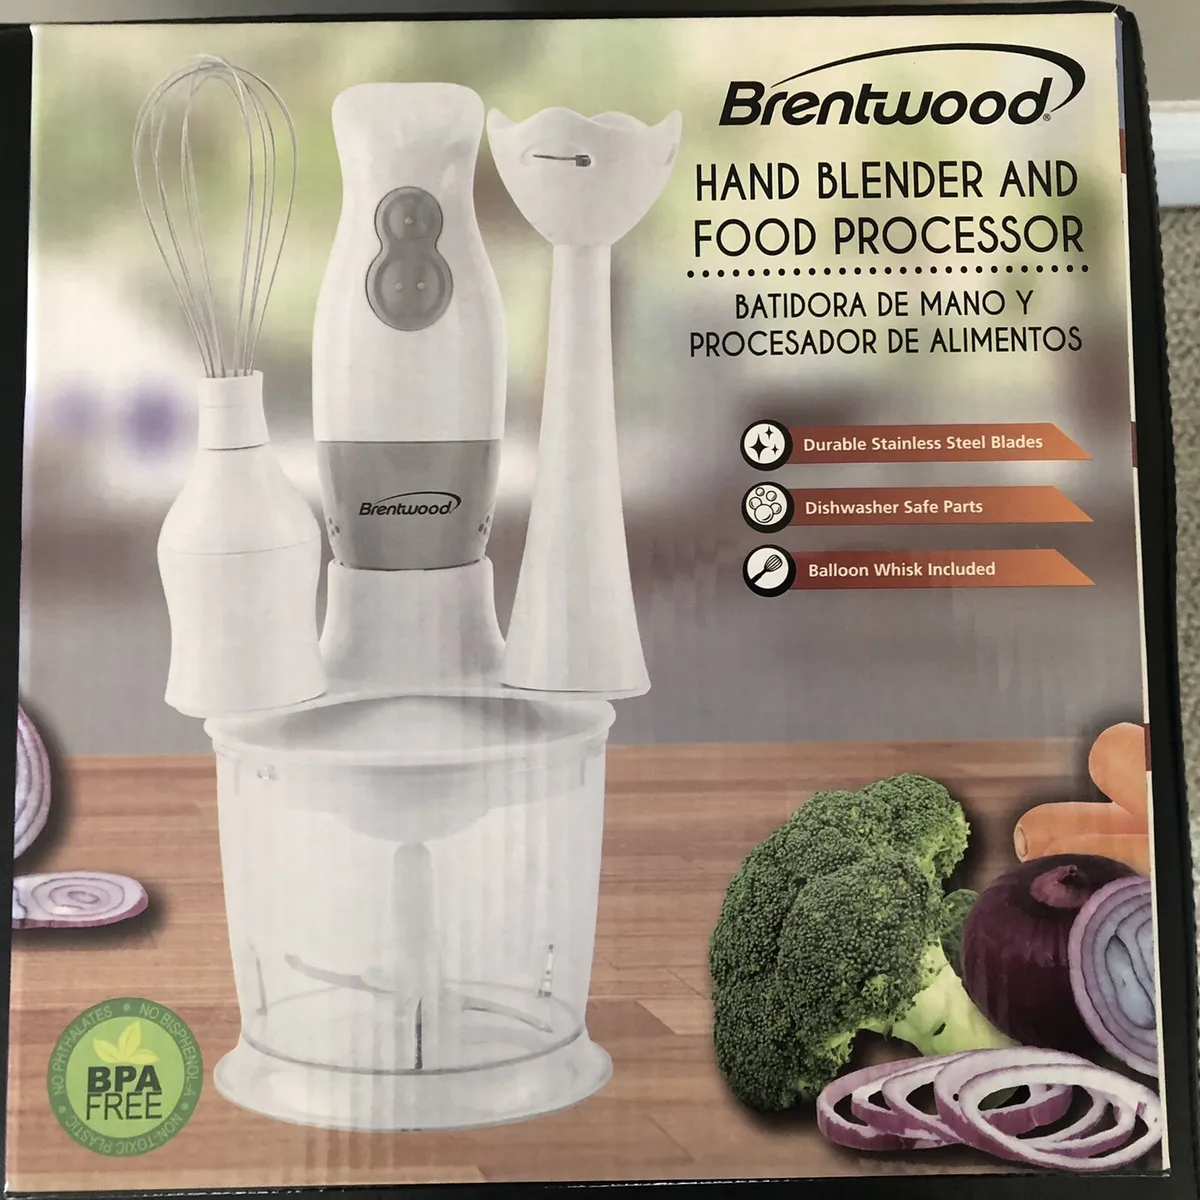 NEW Hand Blender & Food Processor Compact Blend, Chop, Purée, Whisk  Brentwood